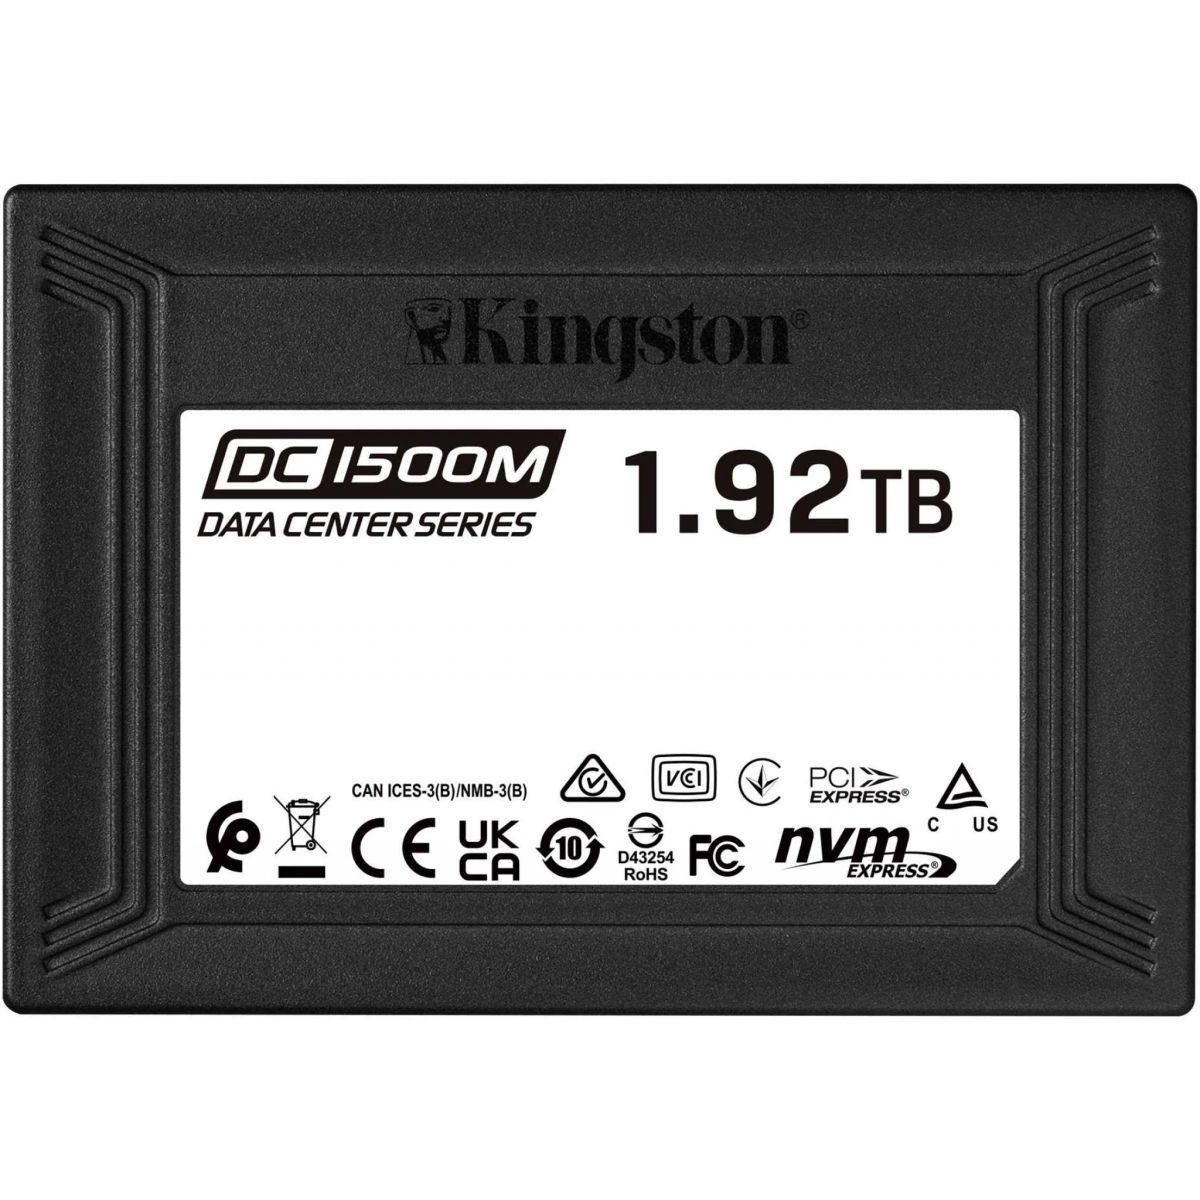 2,5 GB, SEDC1500M/1920G, KINGSTON intern SSD, 12 HDD, Zoll,